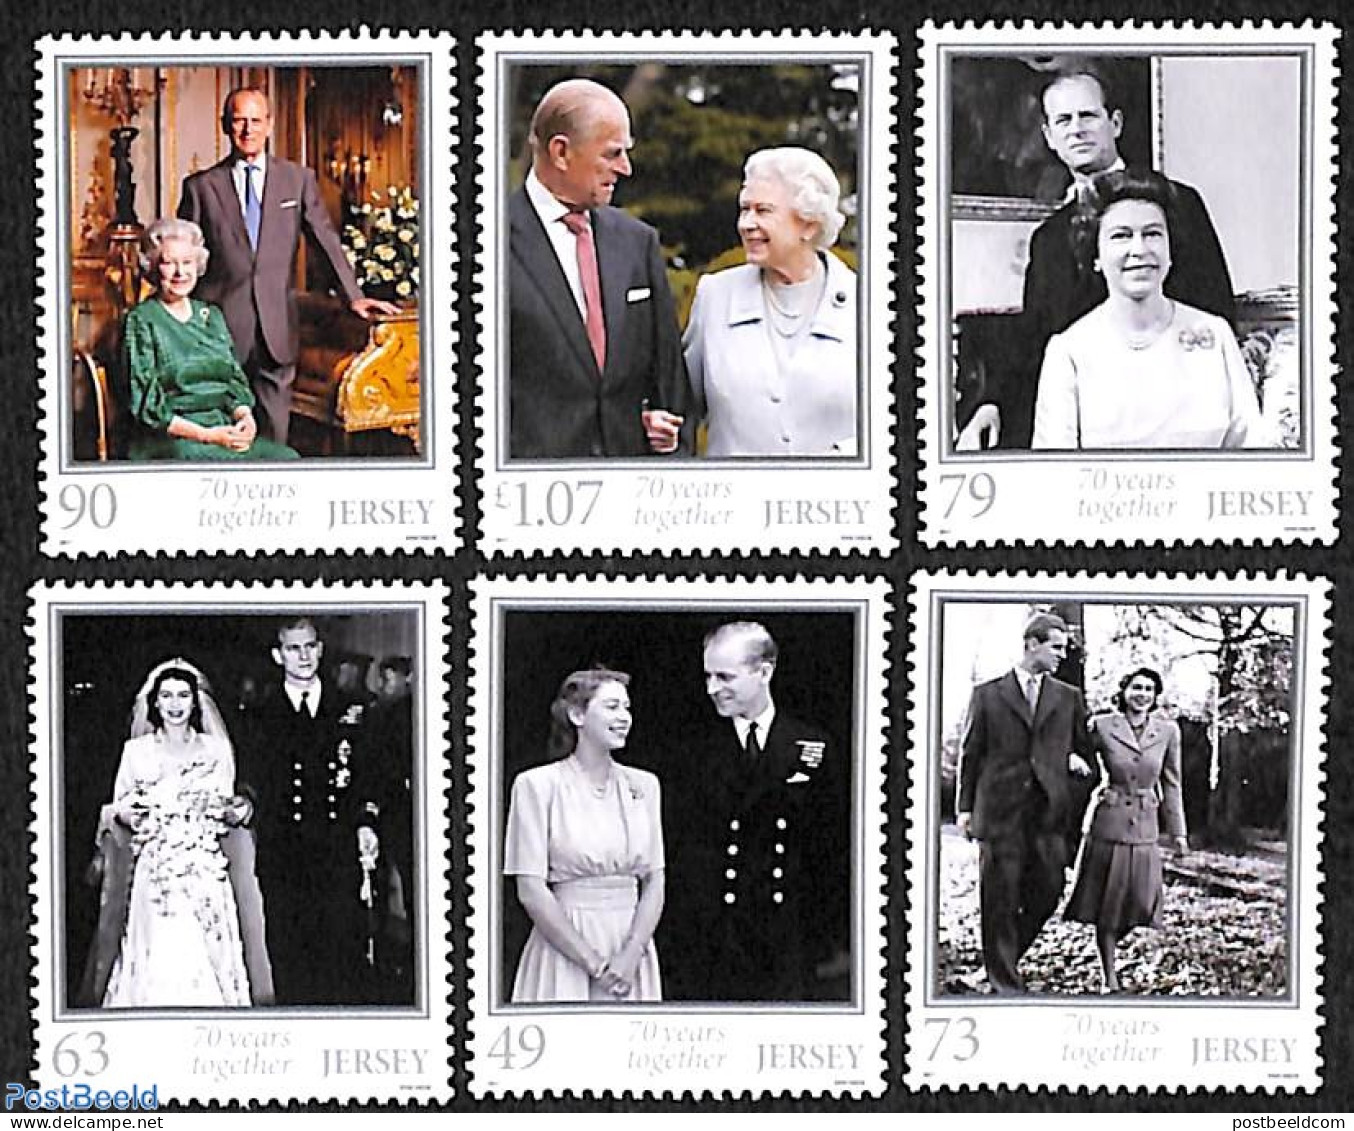 Jersey 2017 70th Wedding Anniversary 6v, Mint NH, History - Kings & Queens (Royalty) - Royalties, Royals